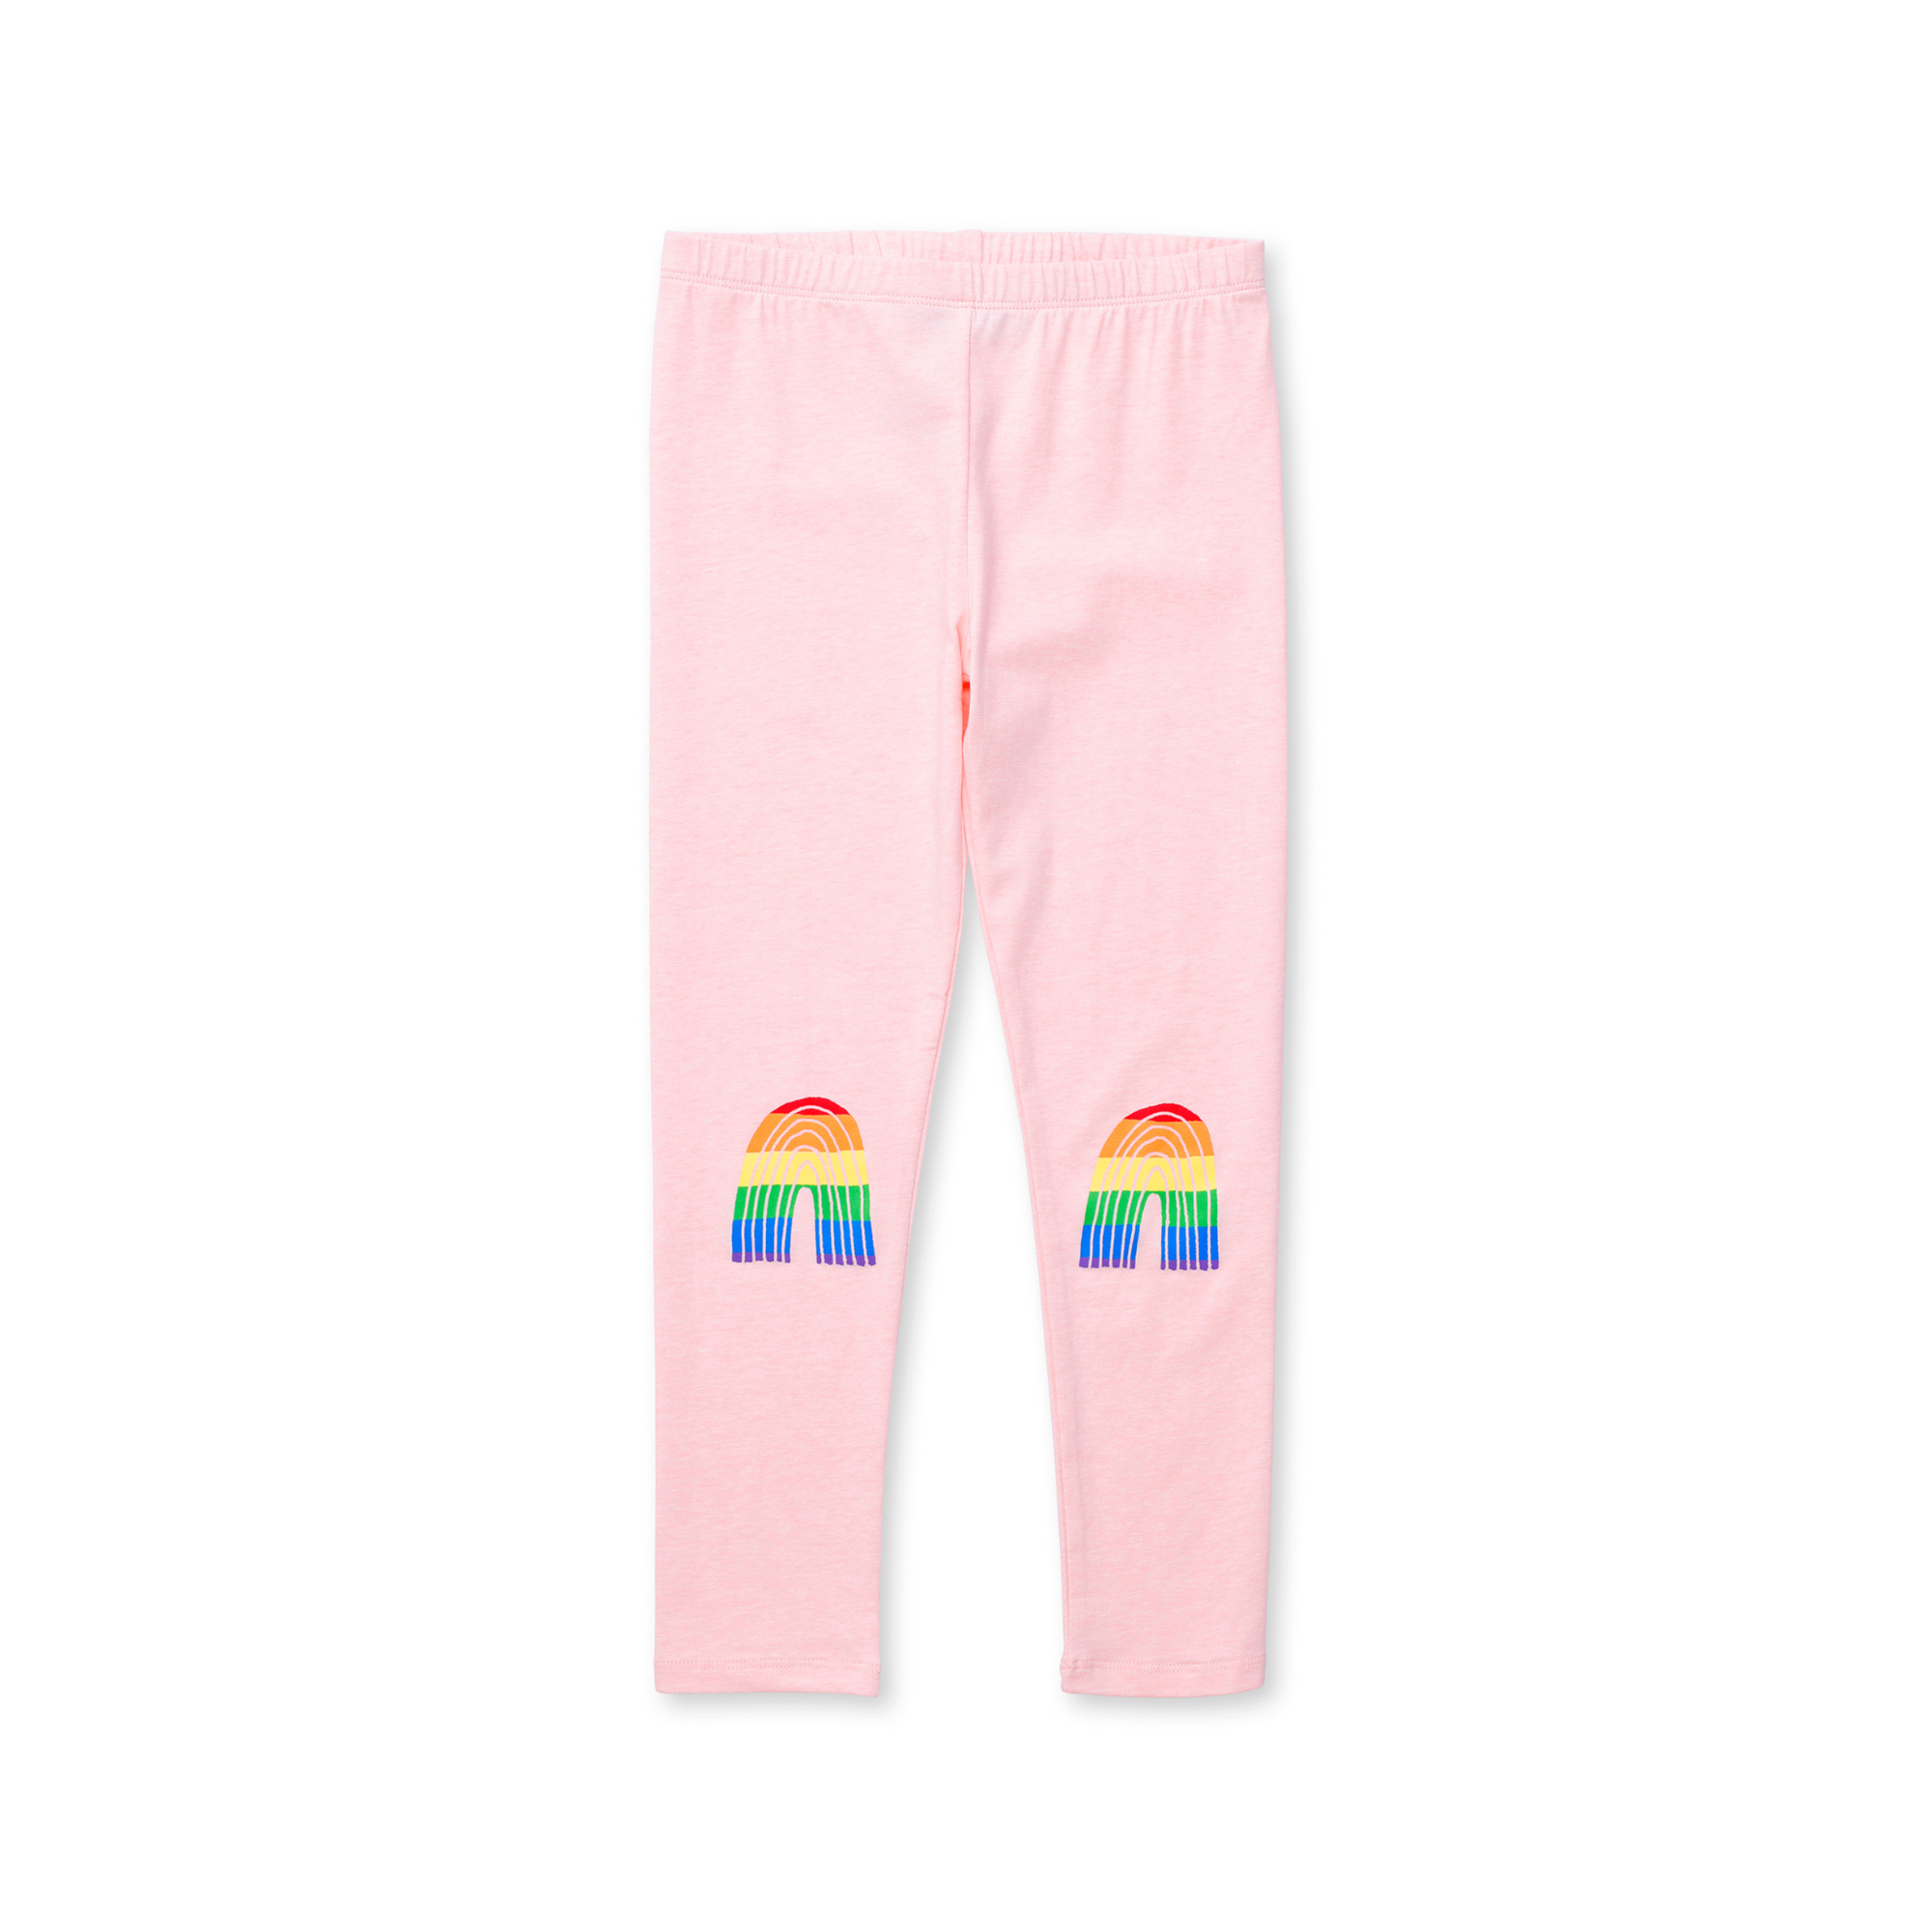 Minti Stripey Rainbow Tights - Pink Marle